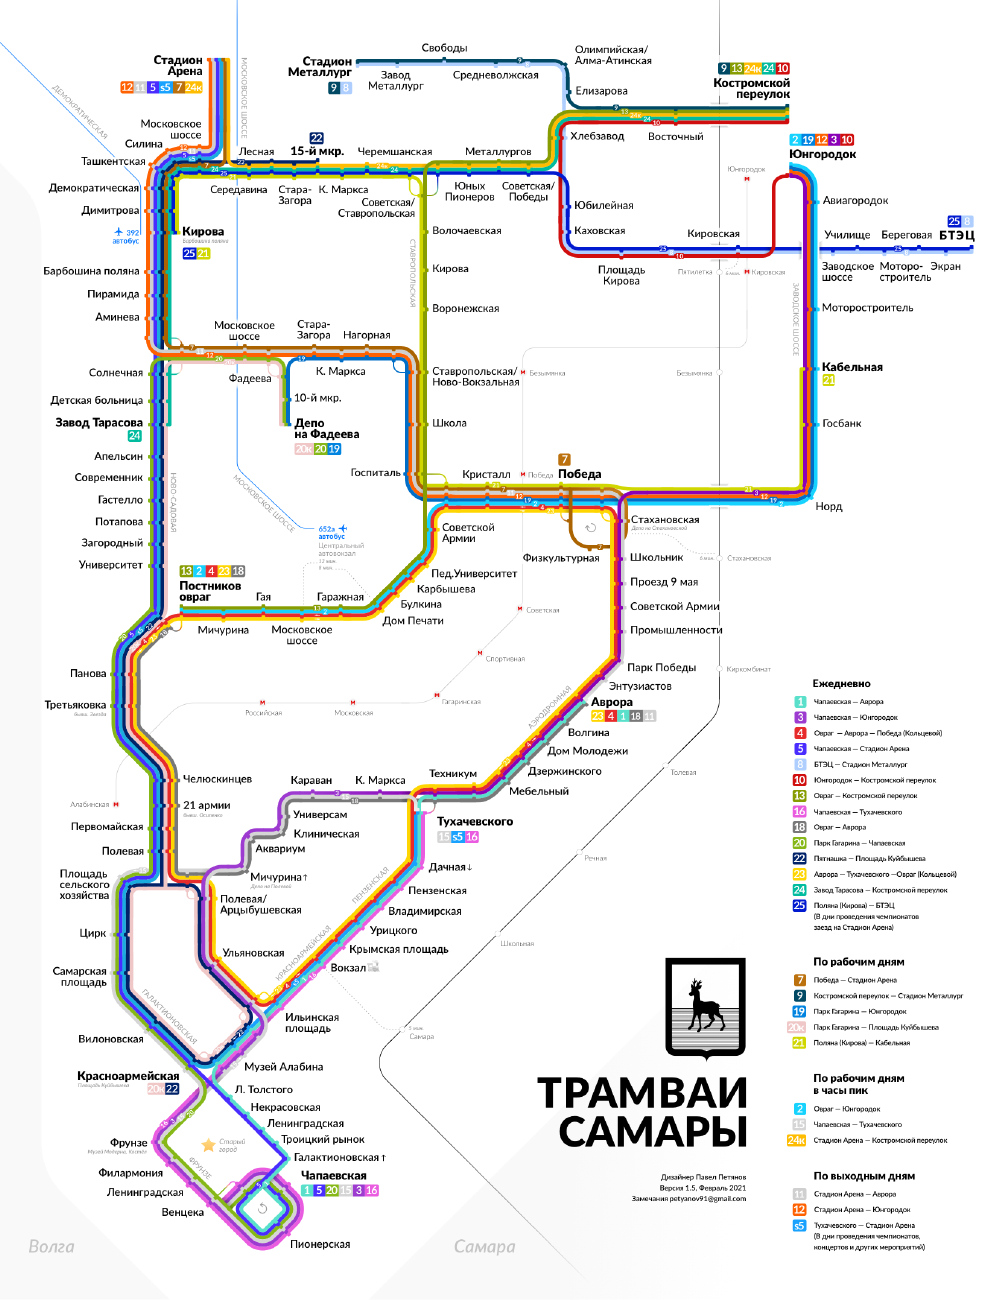 Samara — Maps